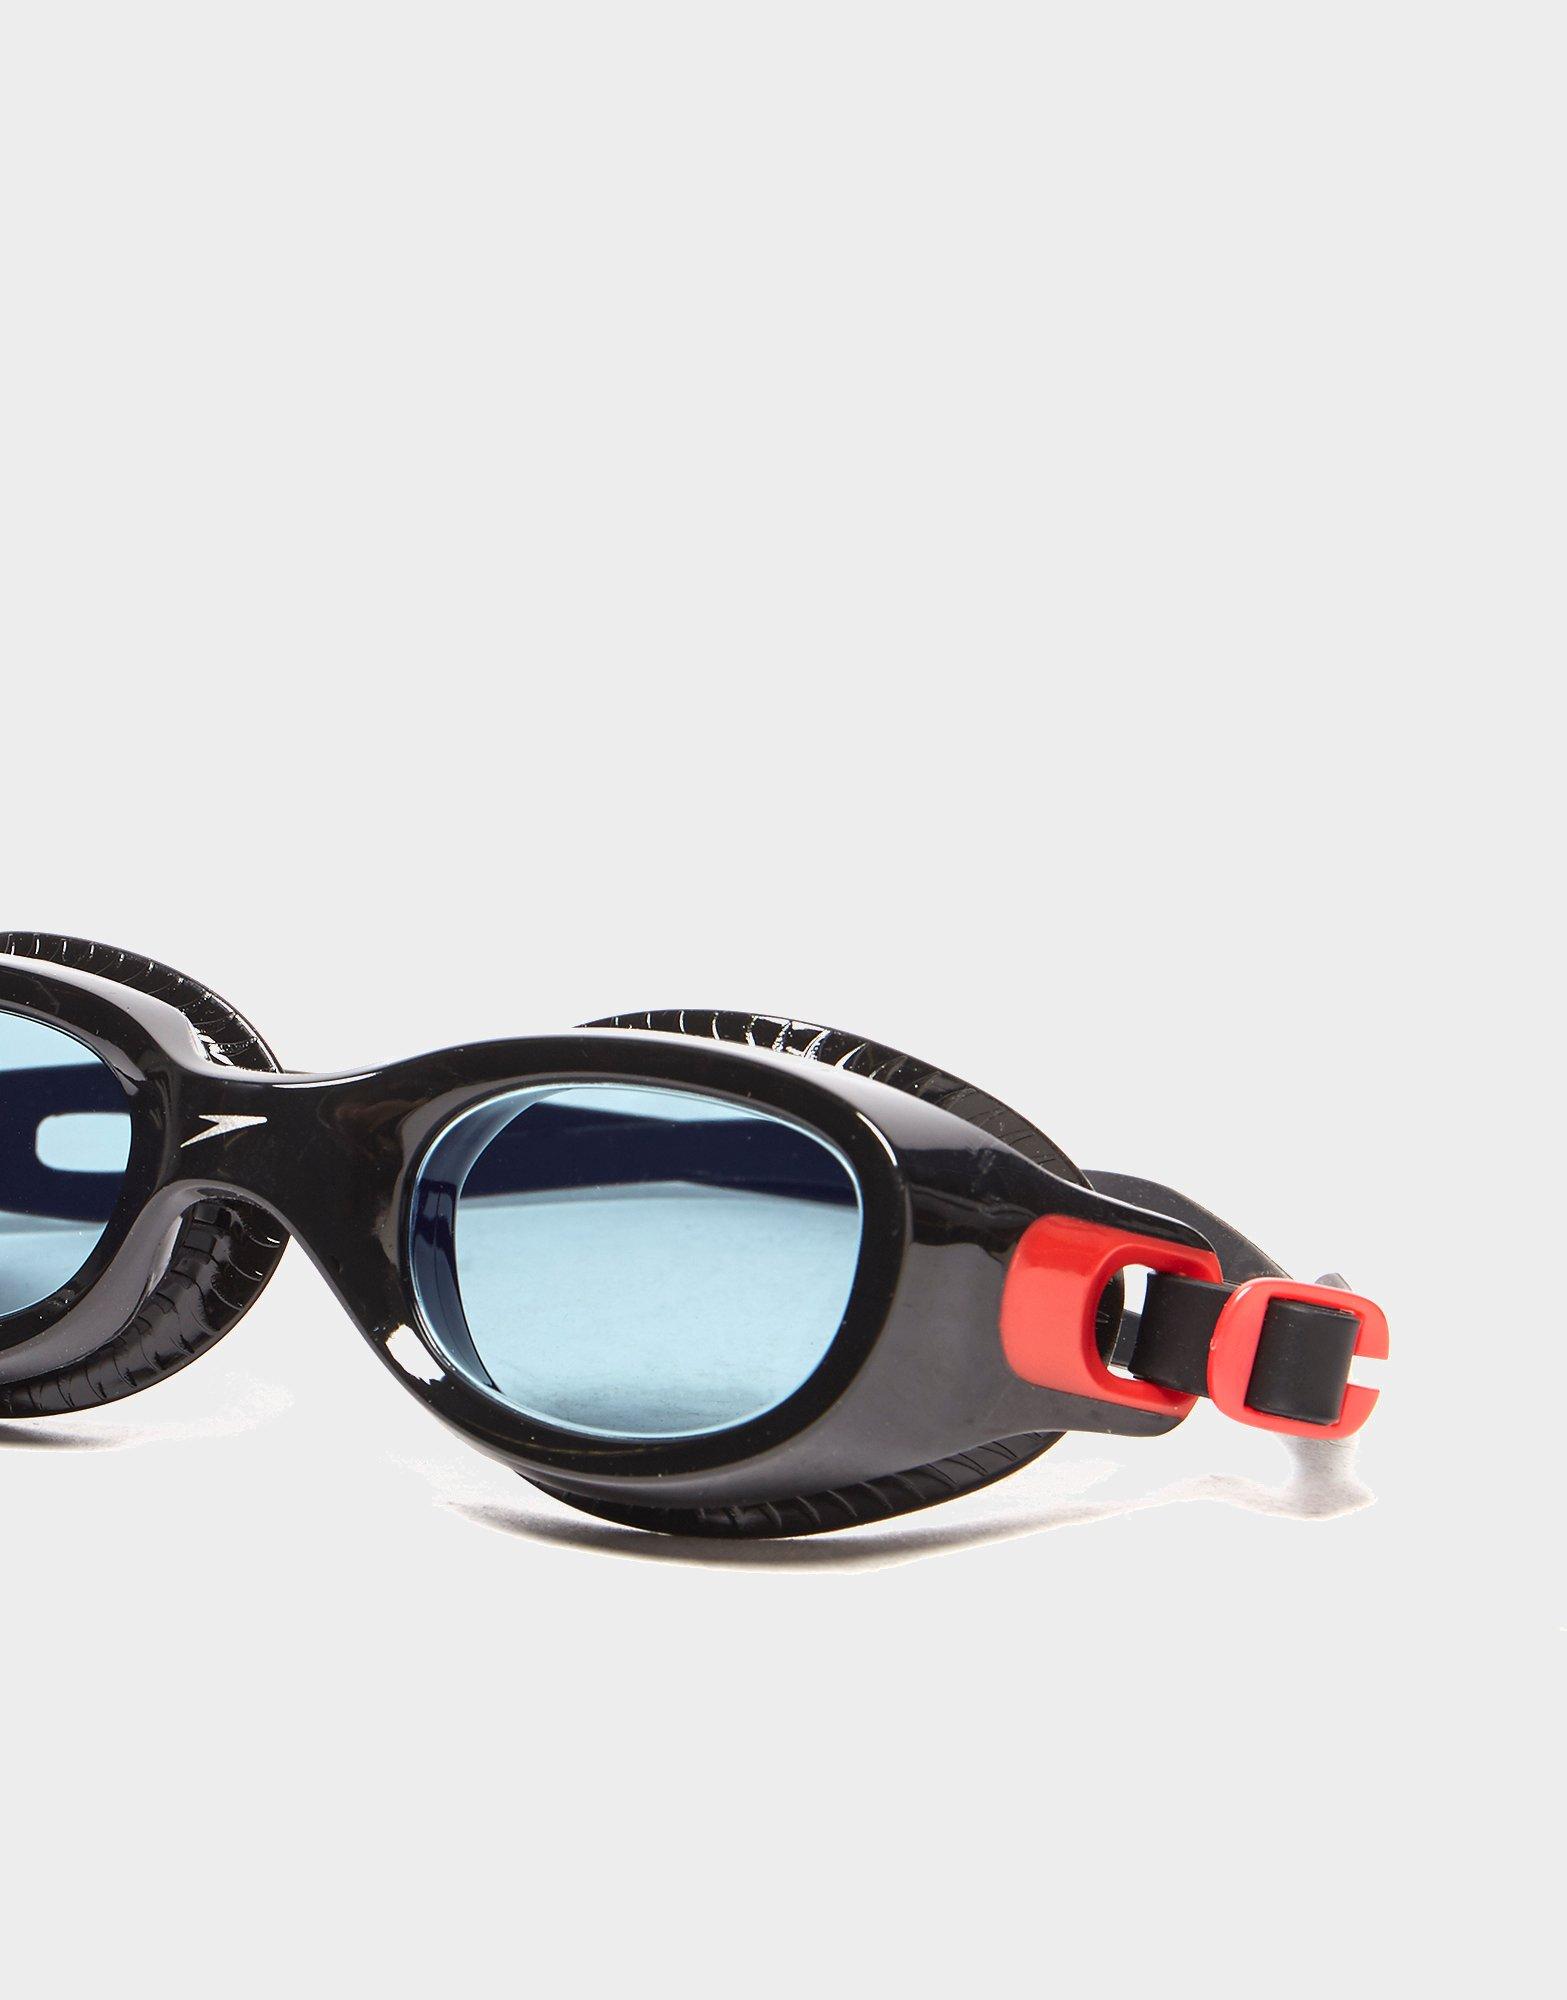 speedo classic goggles